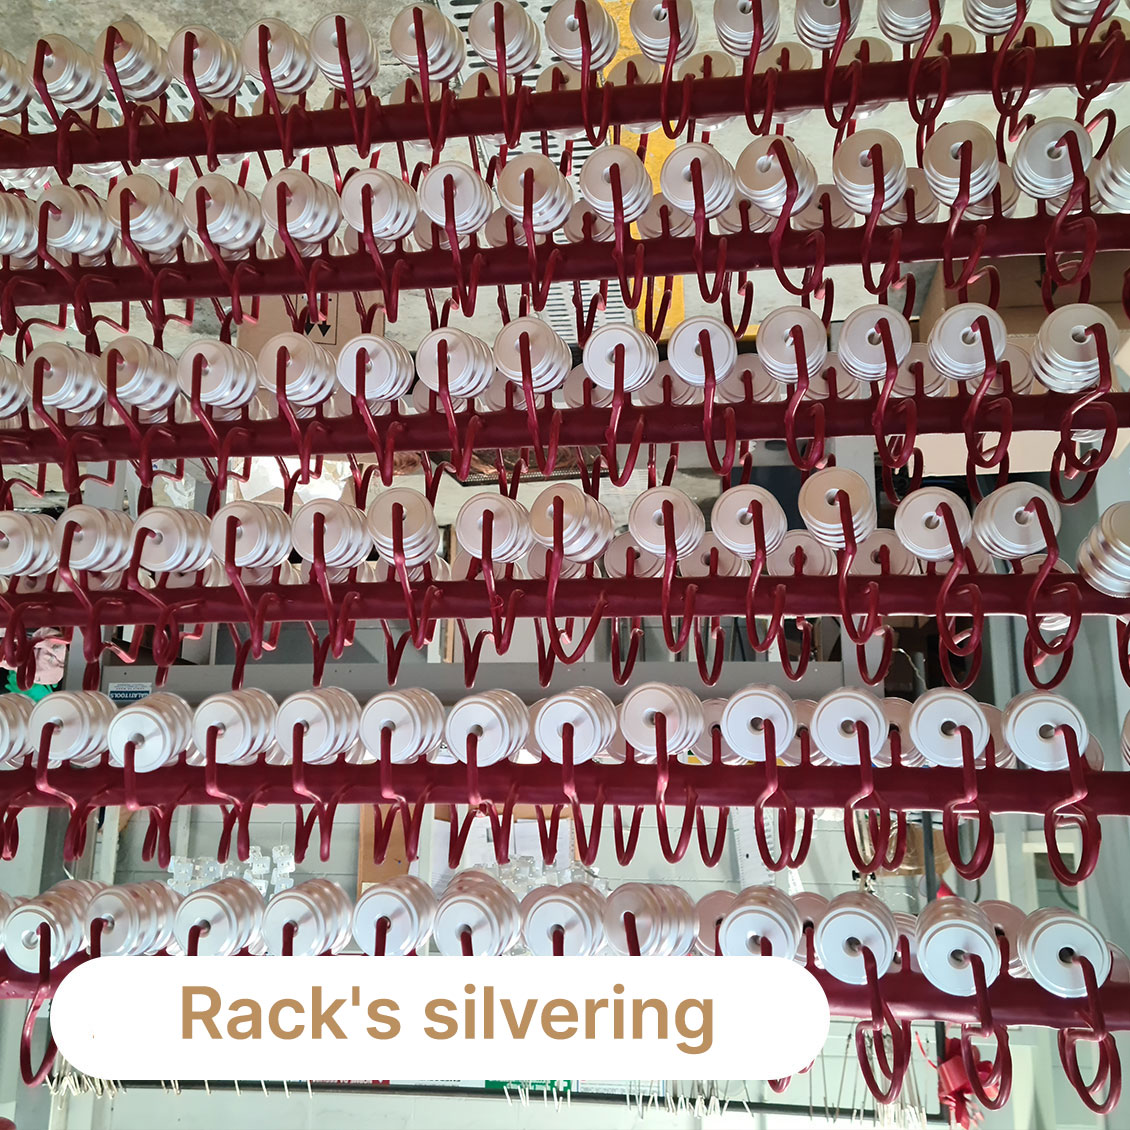 Rack silvering